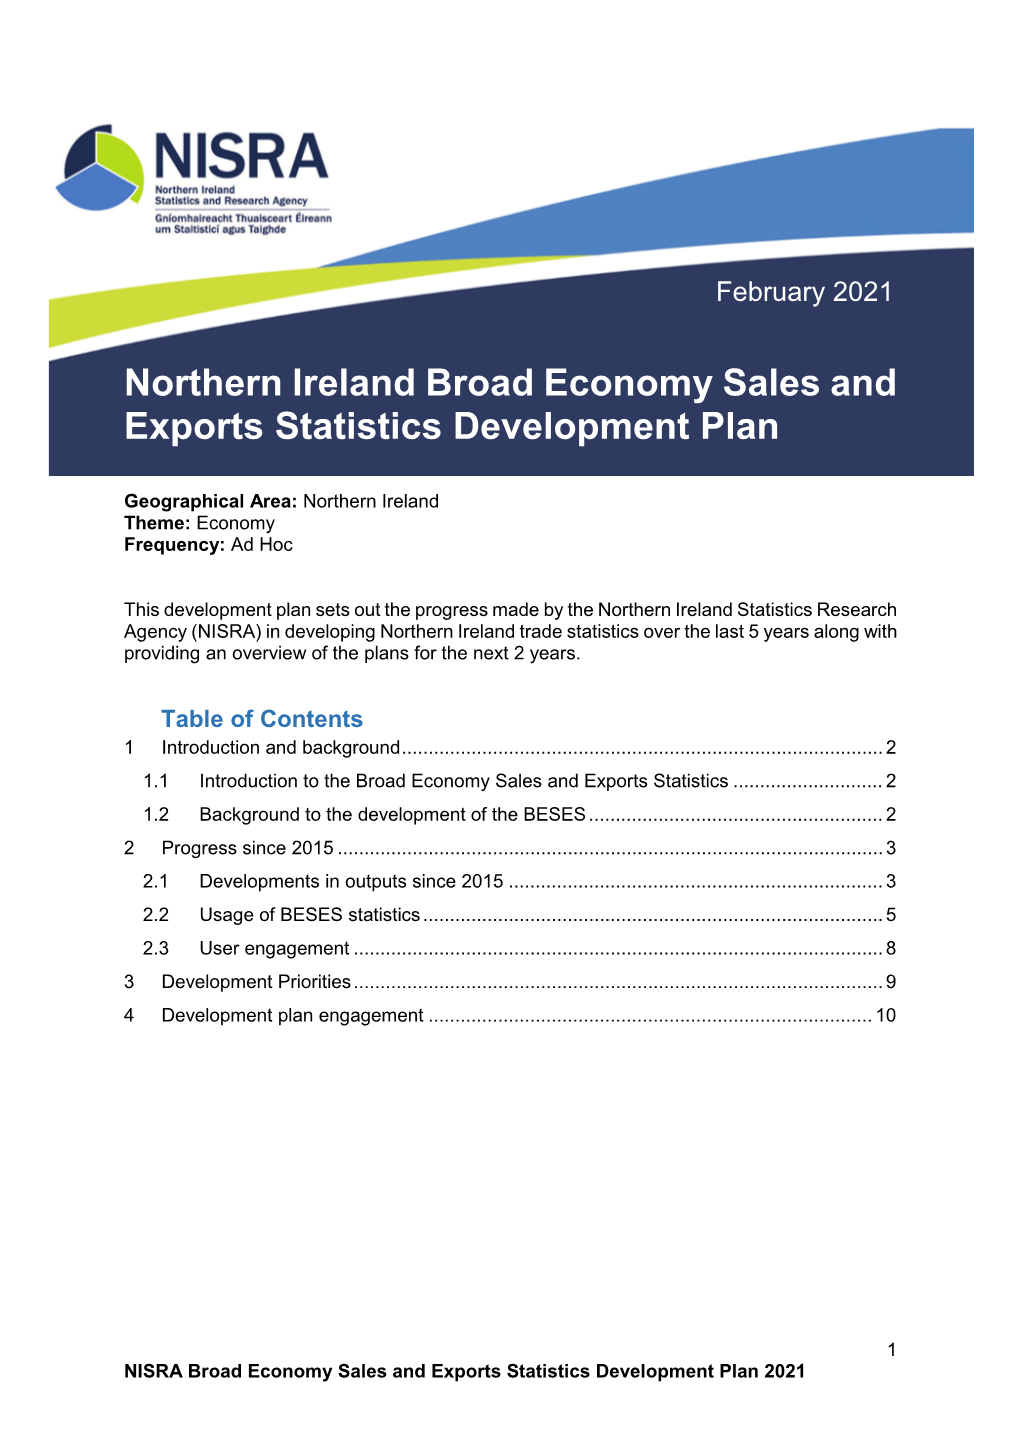 Broad Economy Sales and Exports Statistics Development Plan